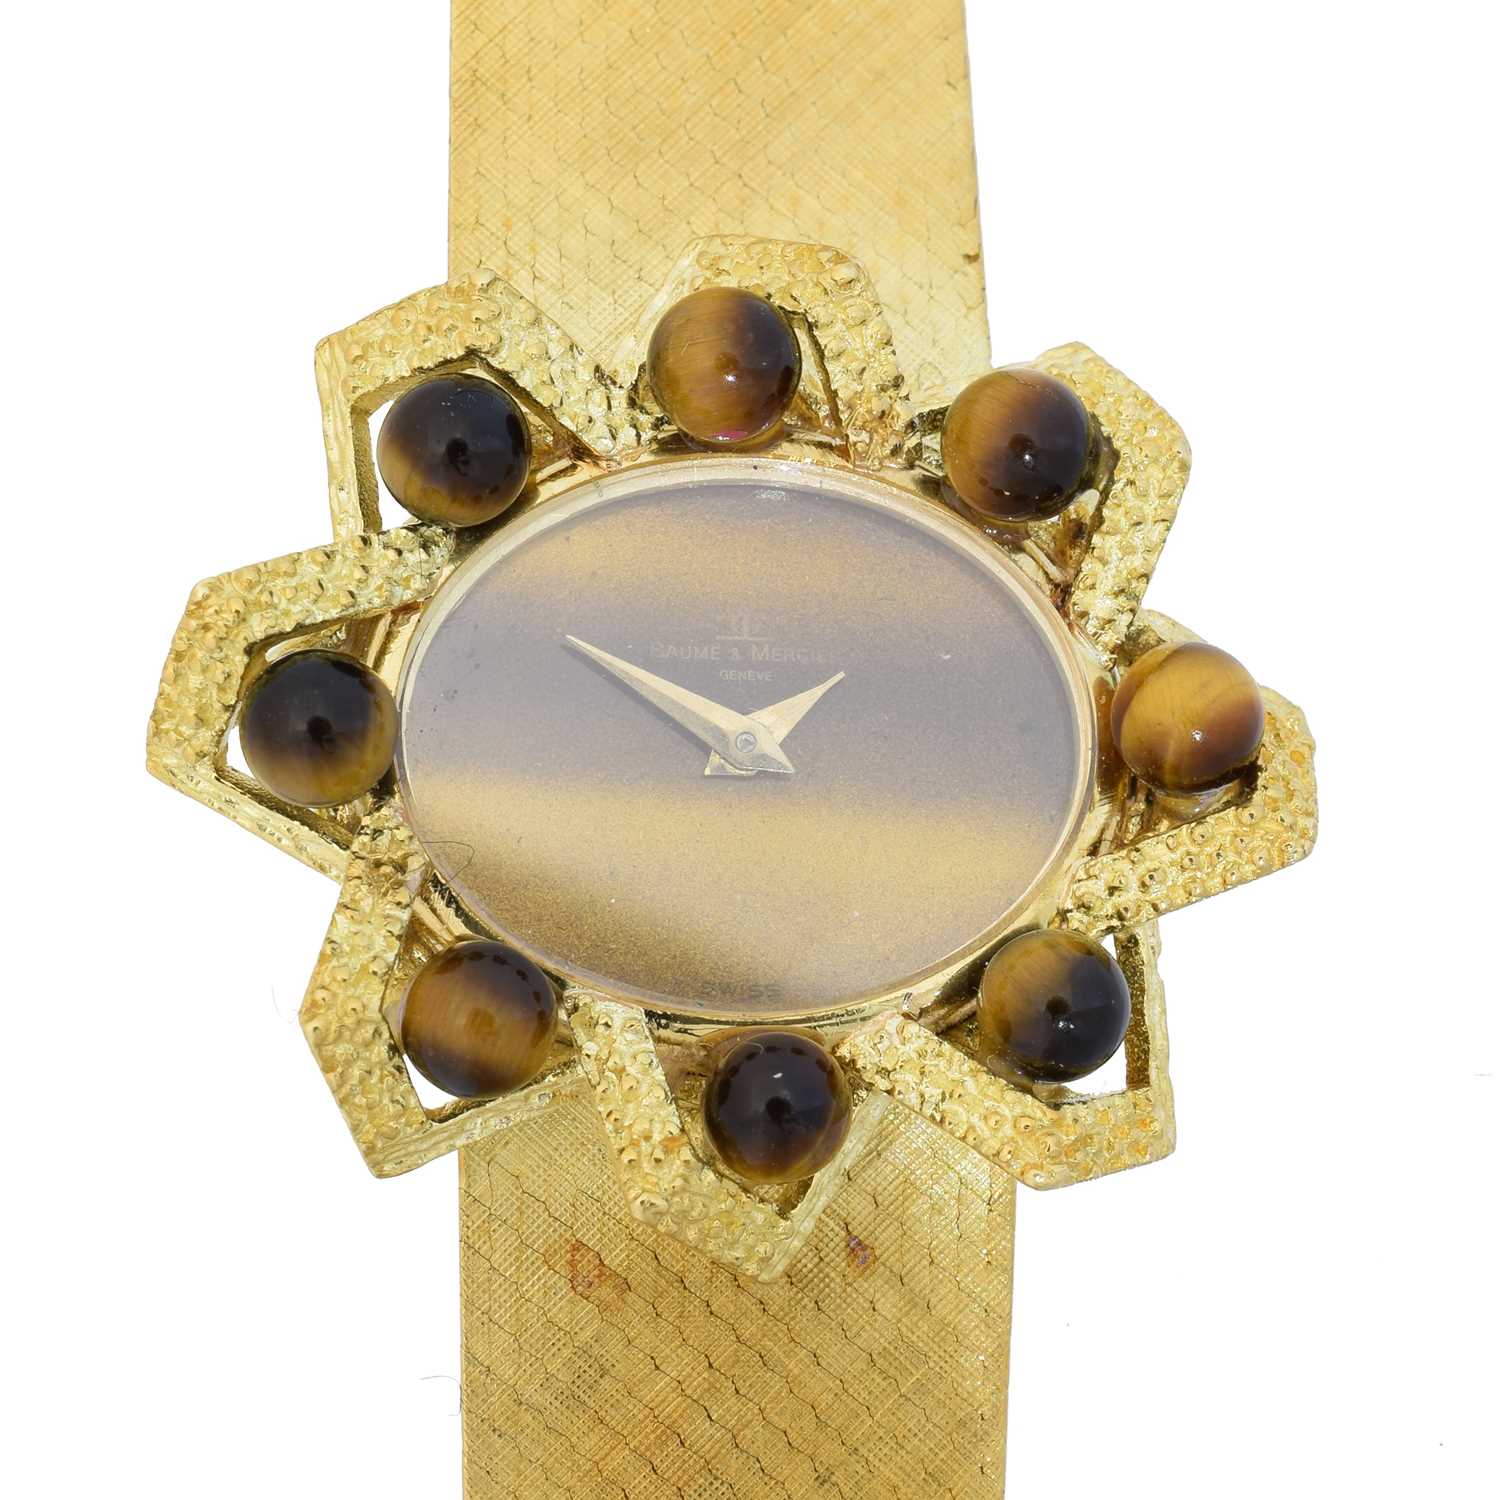 95 - An 18ct gold Baume & Mercier watch,